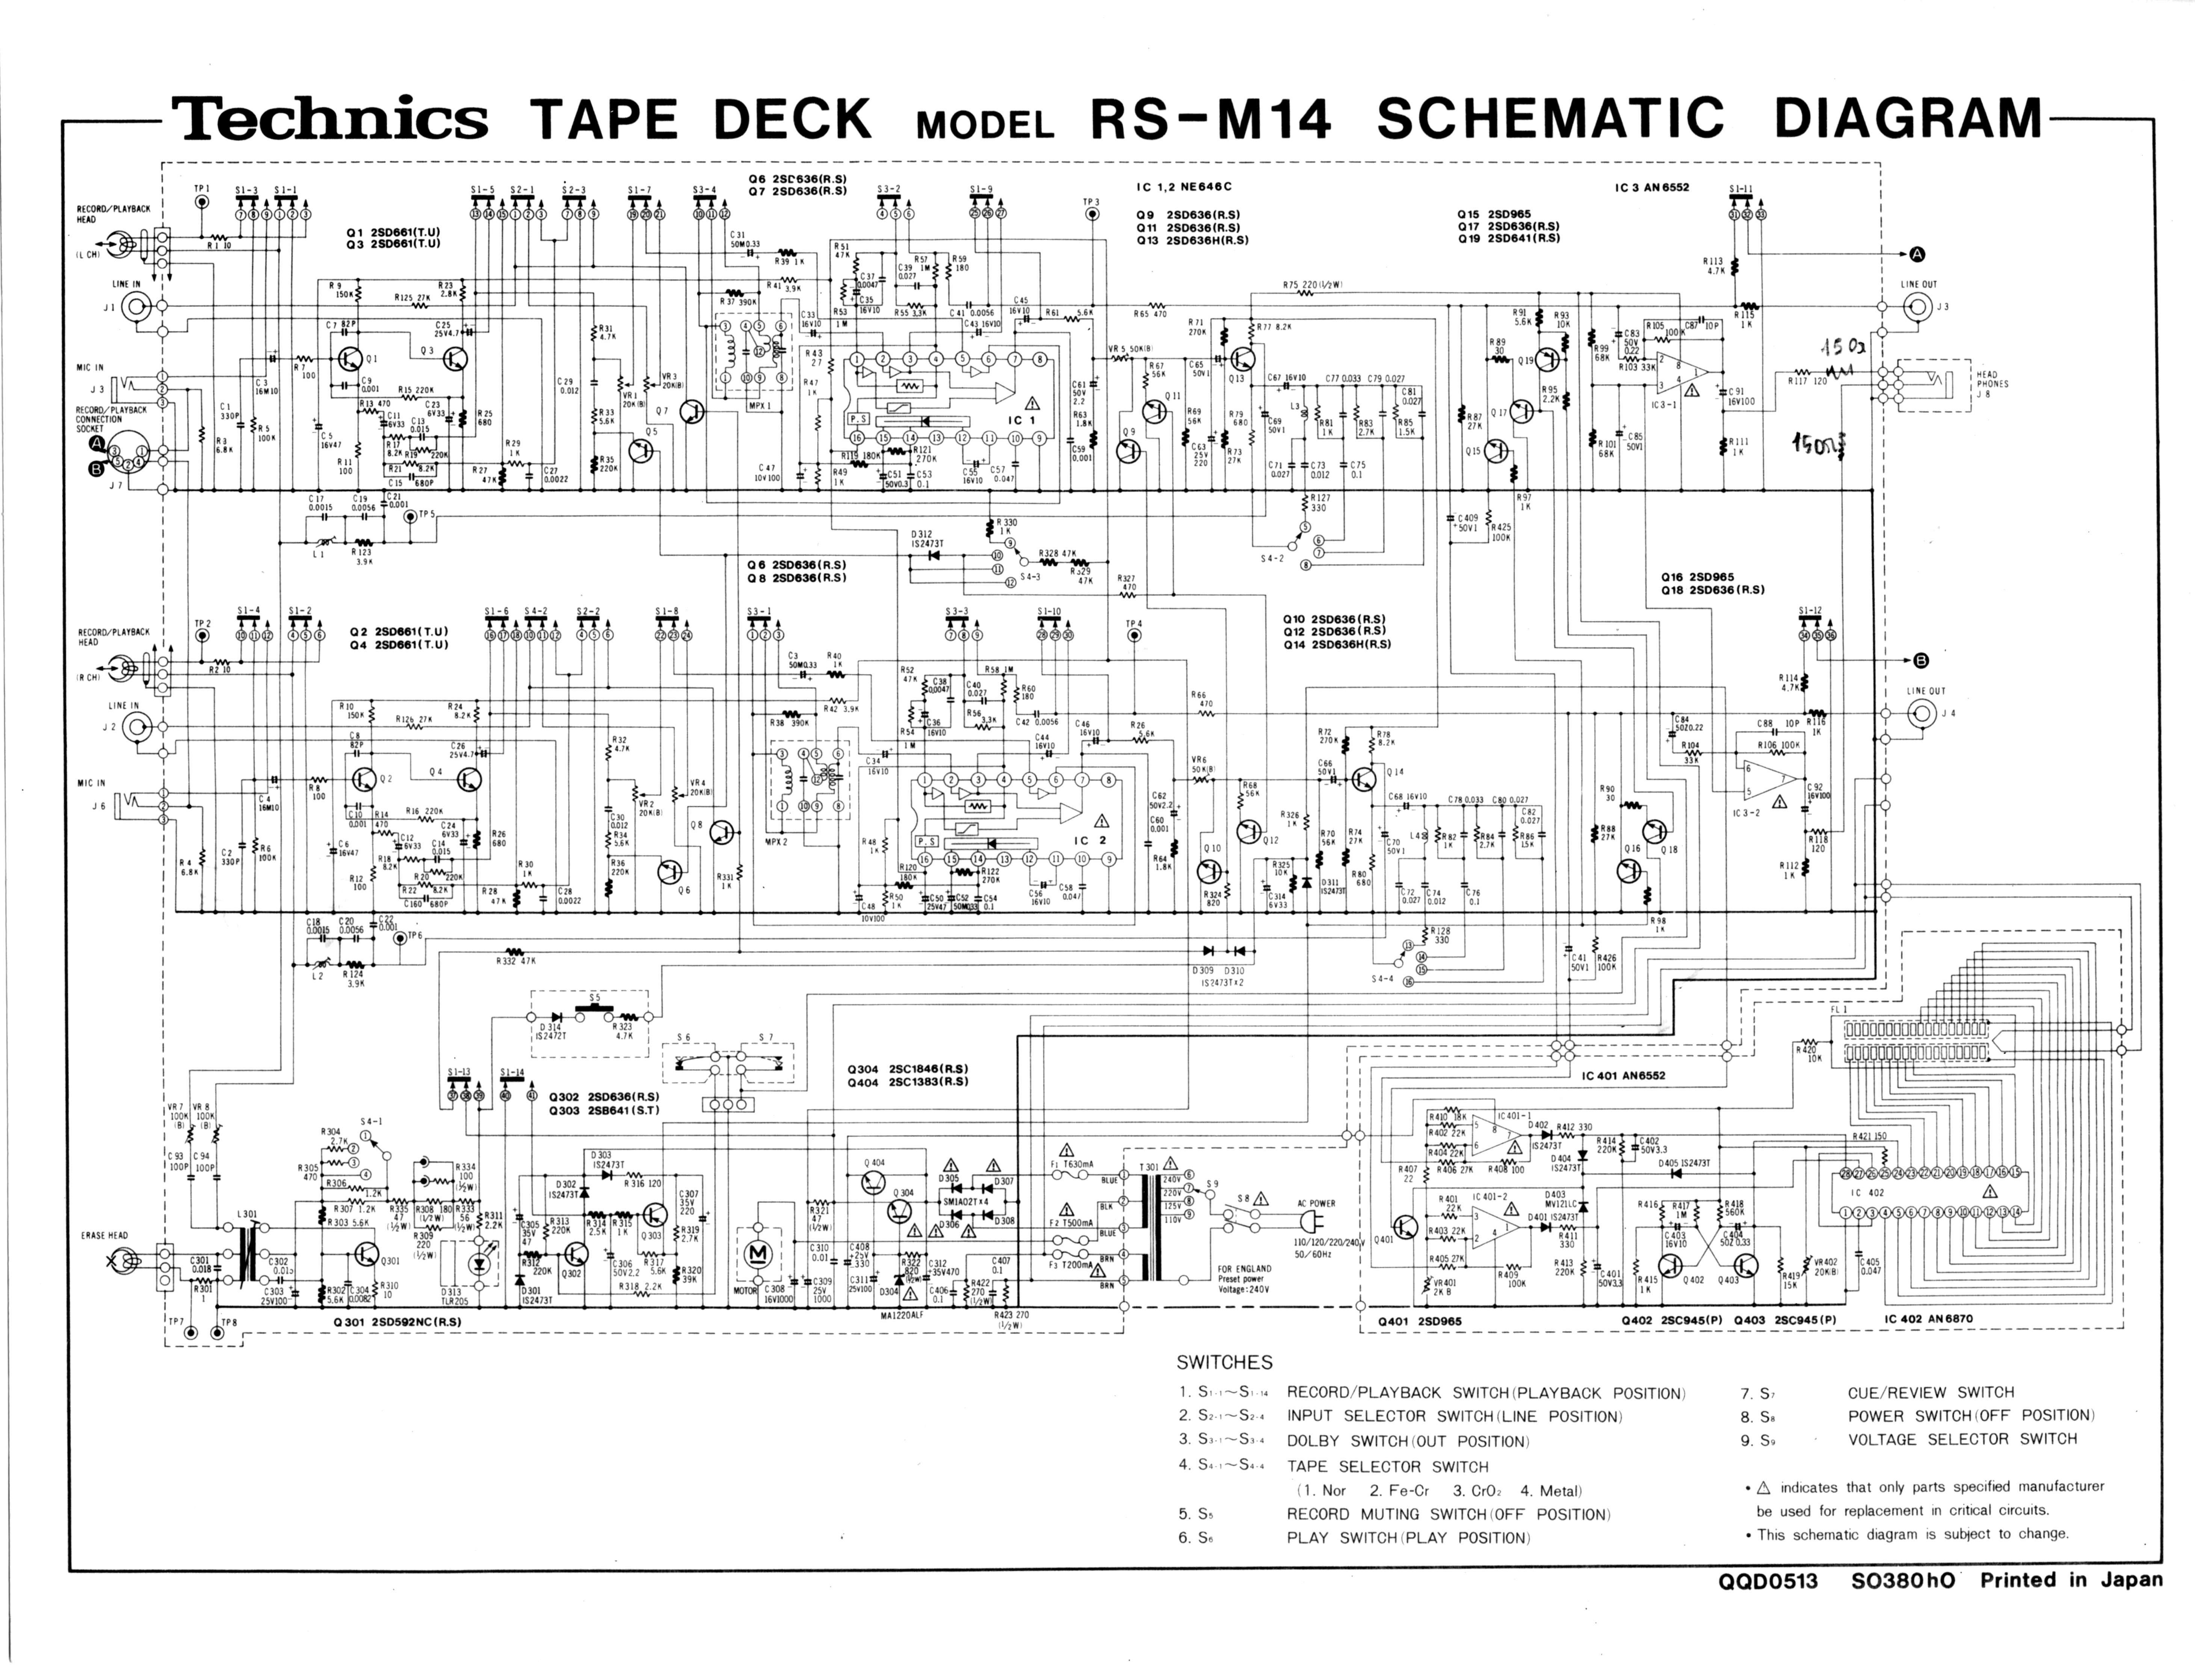 Technics RS-M14 Schematic Diagram of tape deck Technics RS-M14